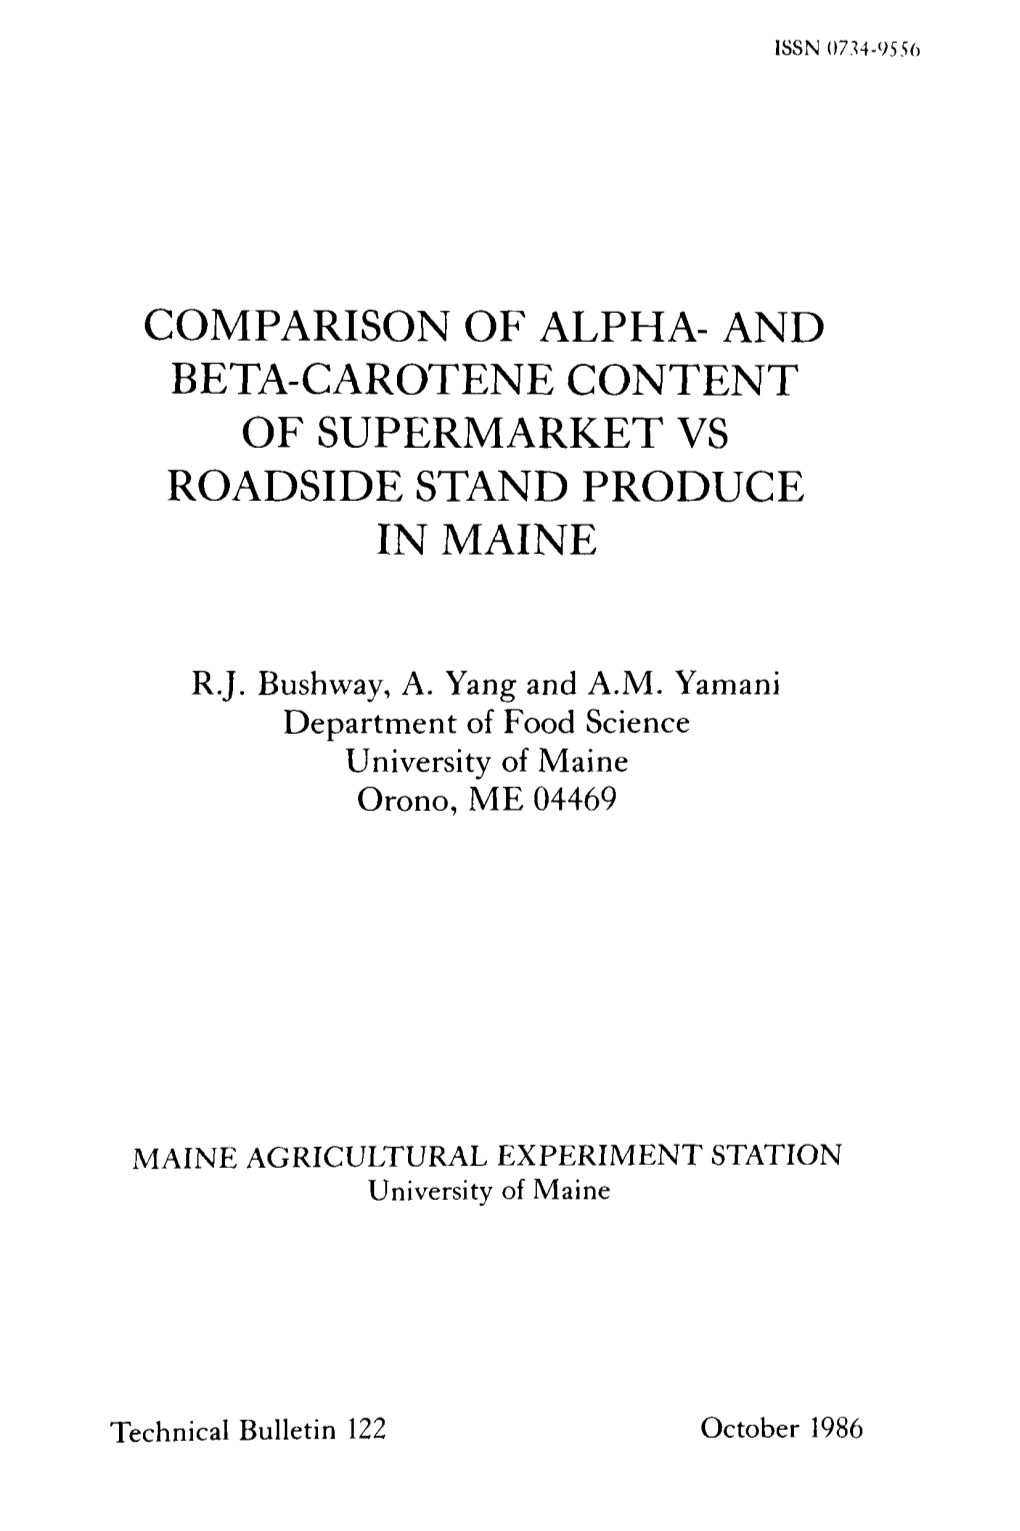 Comparison of Alpha- and Beta-Carotene Content of Supermarket Vs Roadside Stand Produce in Maine